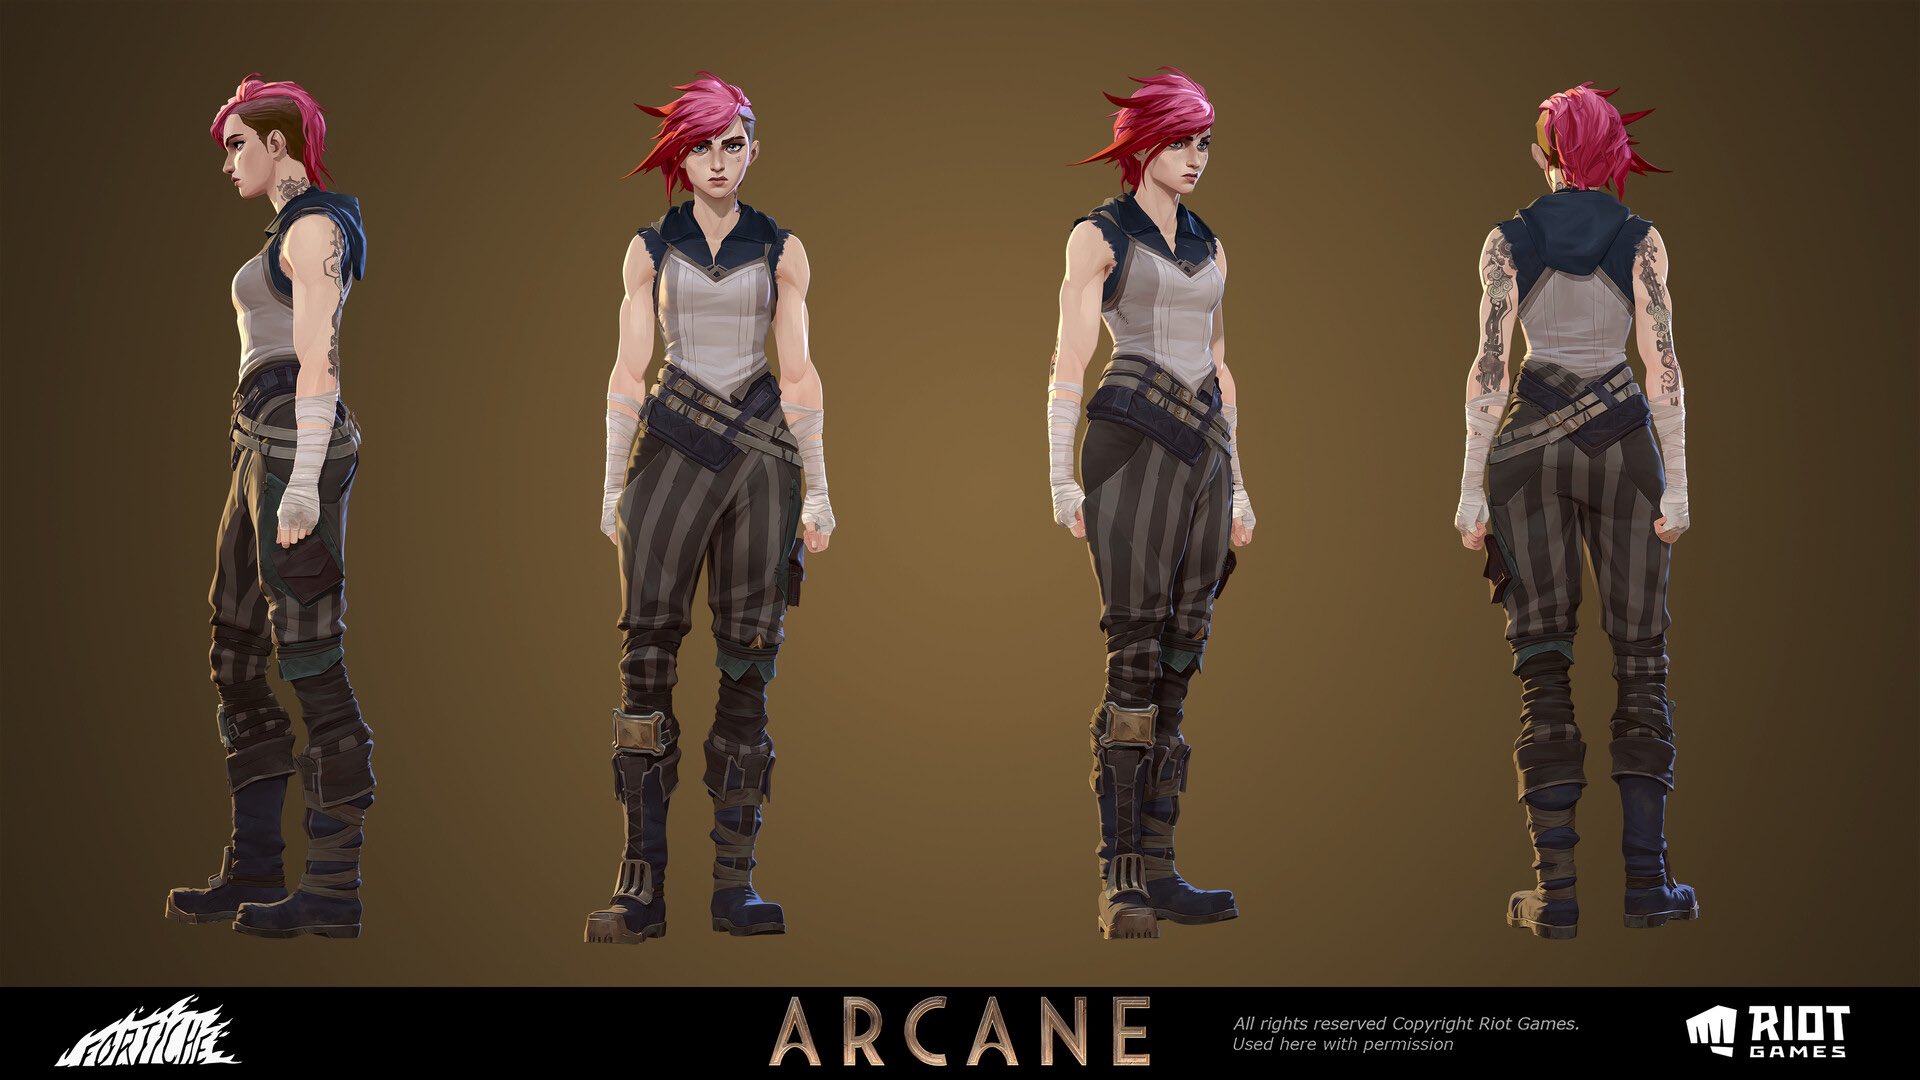 Arcane League Of Legends Vi Model 1 By Jinxpowder Pow Pow On Deviantart